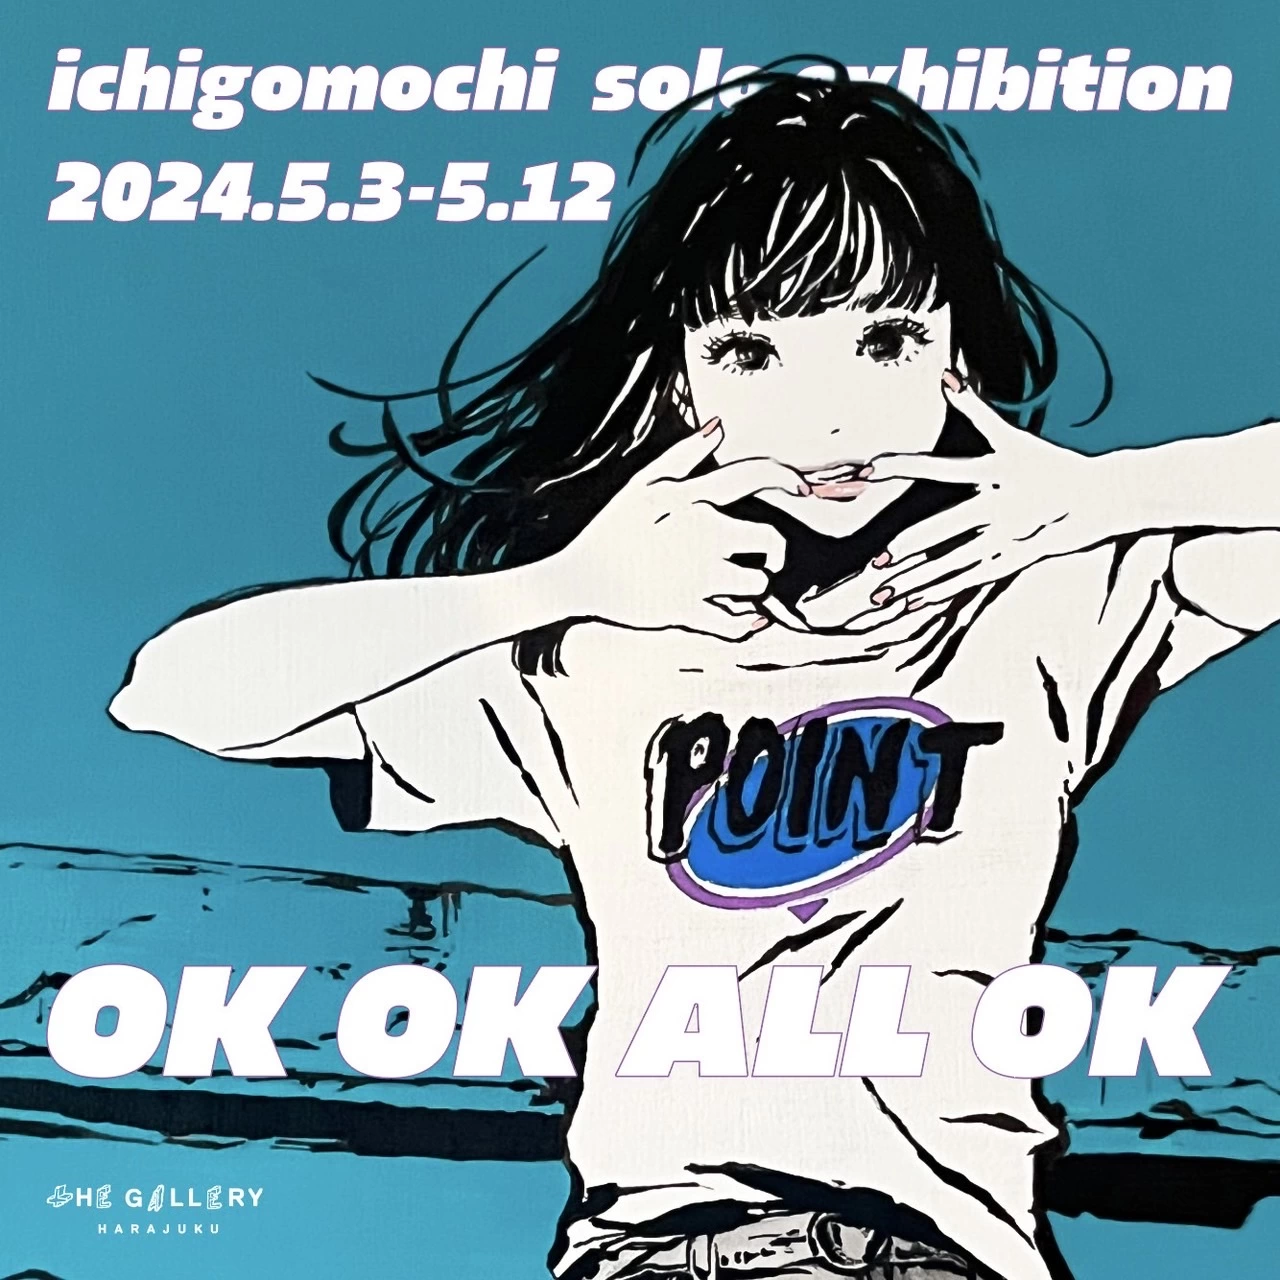 chigomochi solo exhibition "OK OK ALL OK"